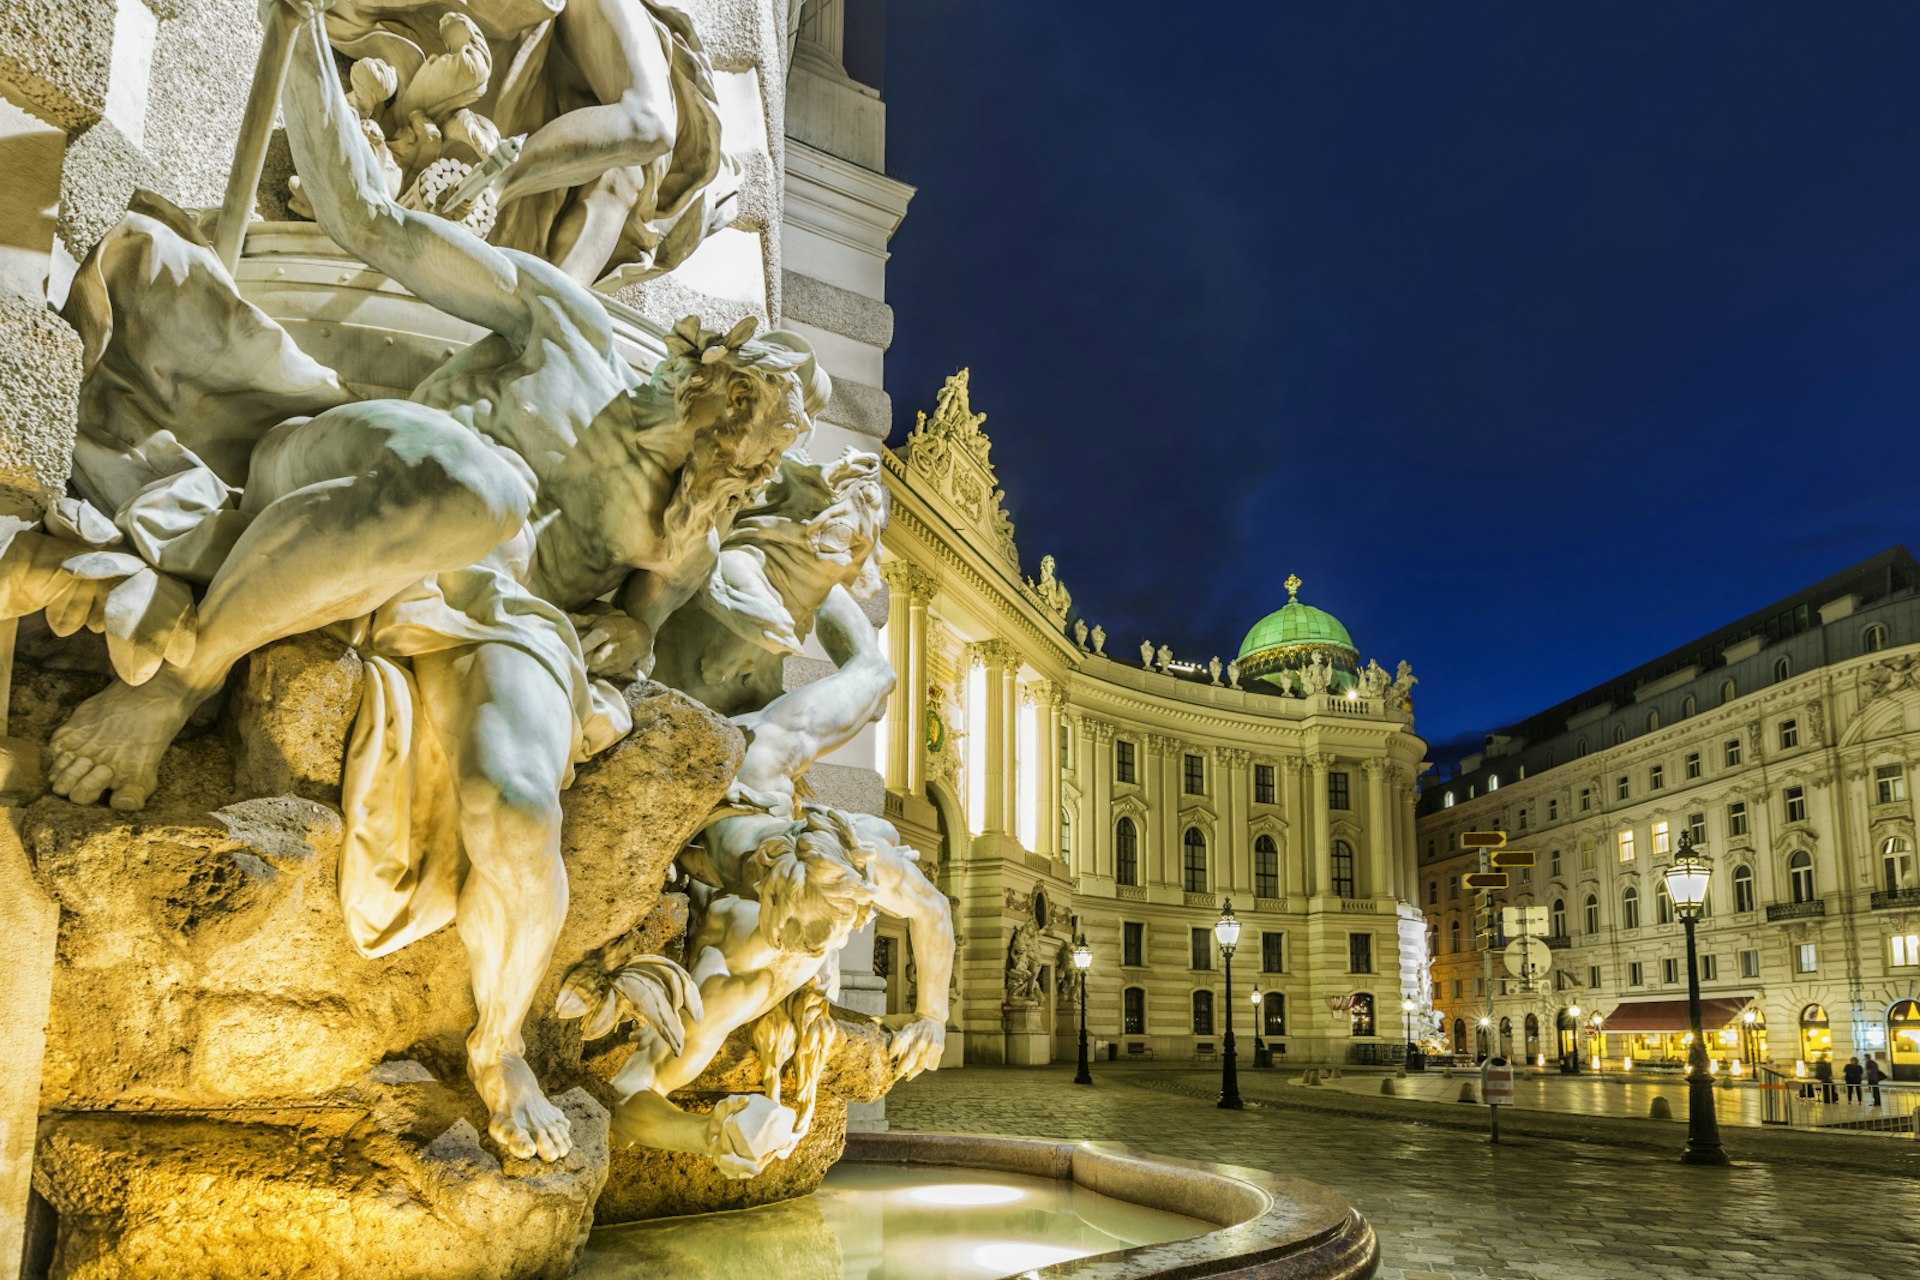 The Hofburg in Vienna under the shadow of darkness